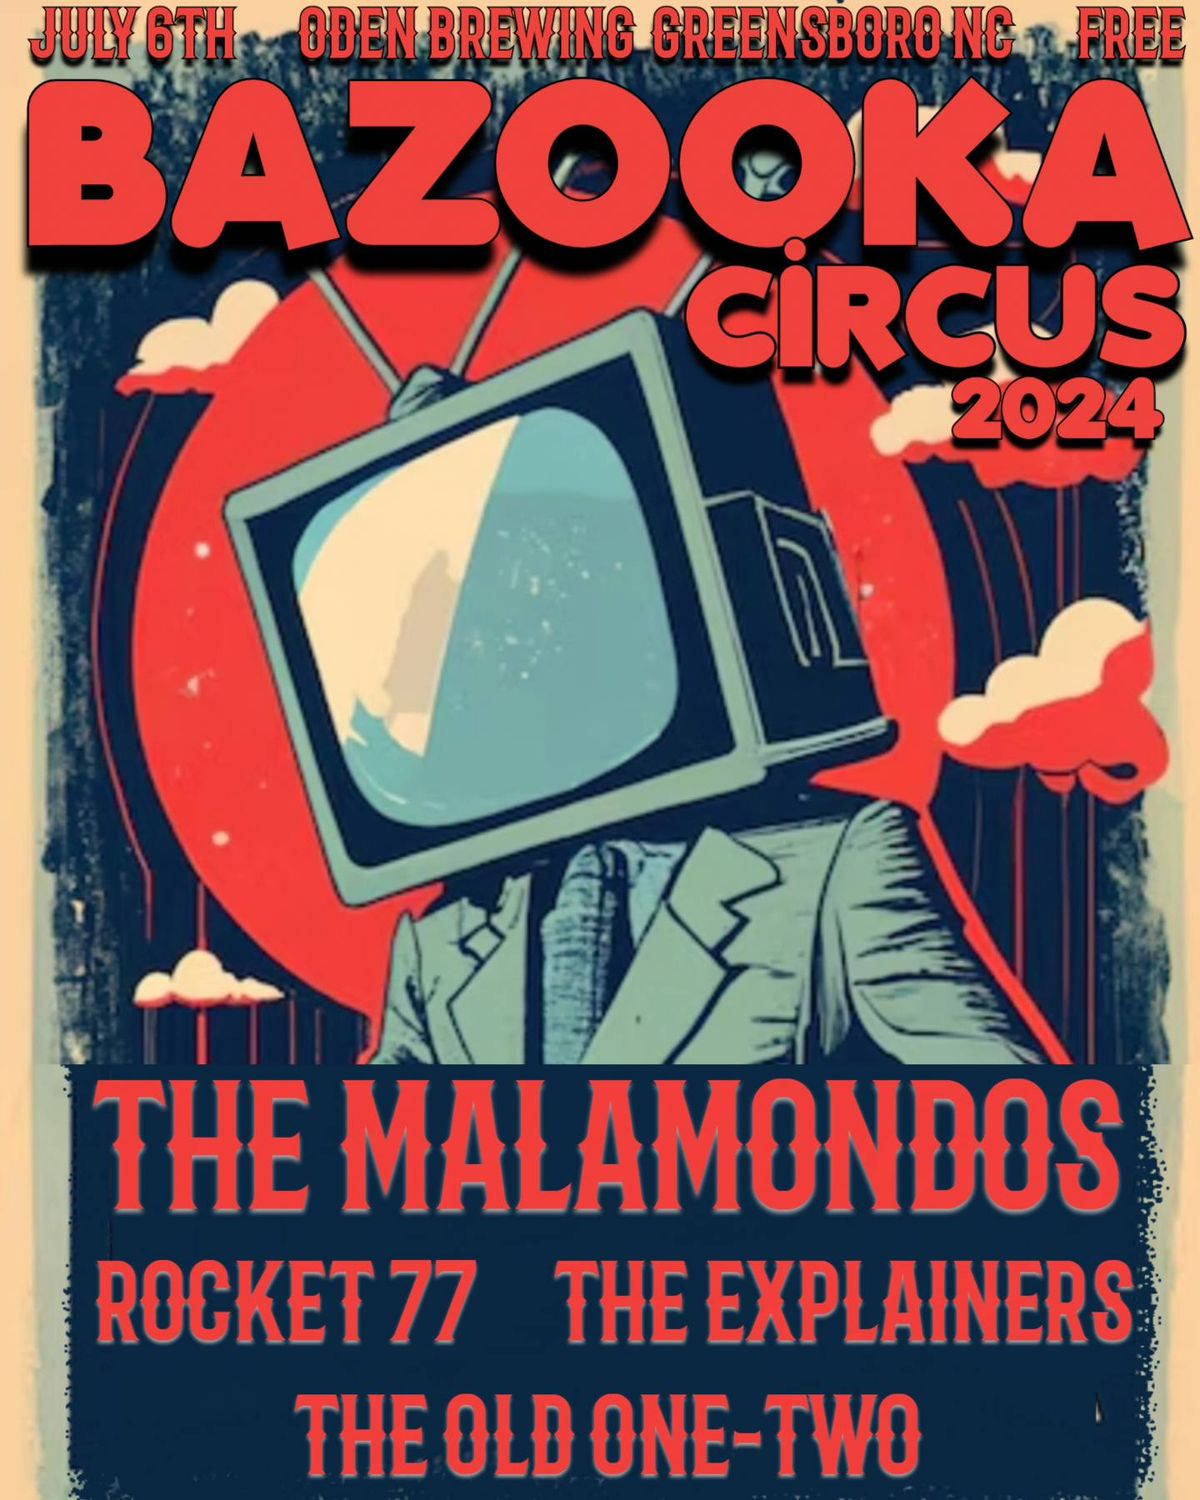 4th Annual Bazooka Circus at Oden!